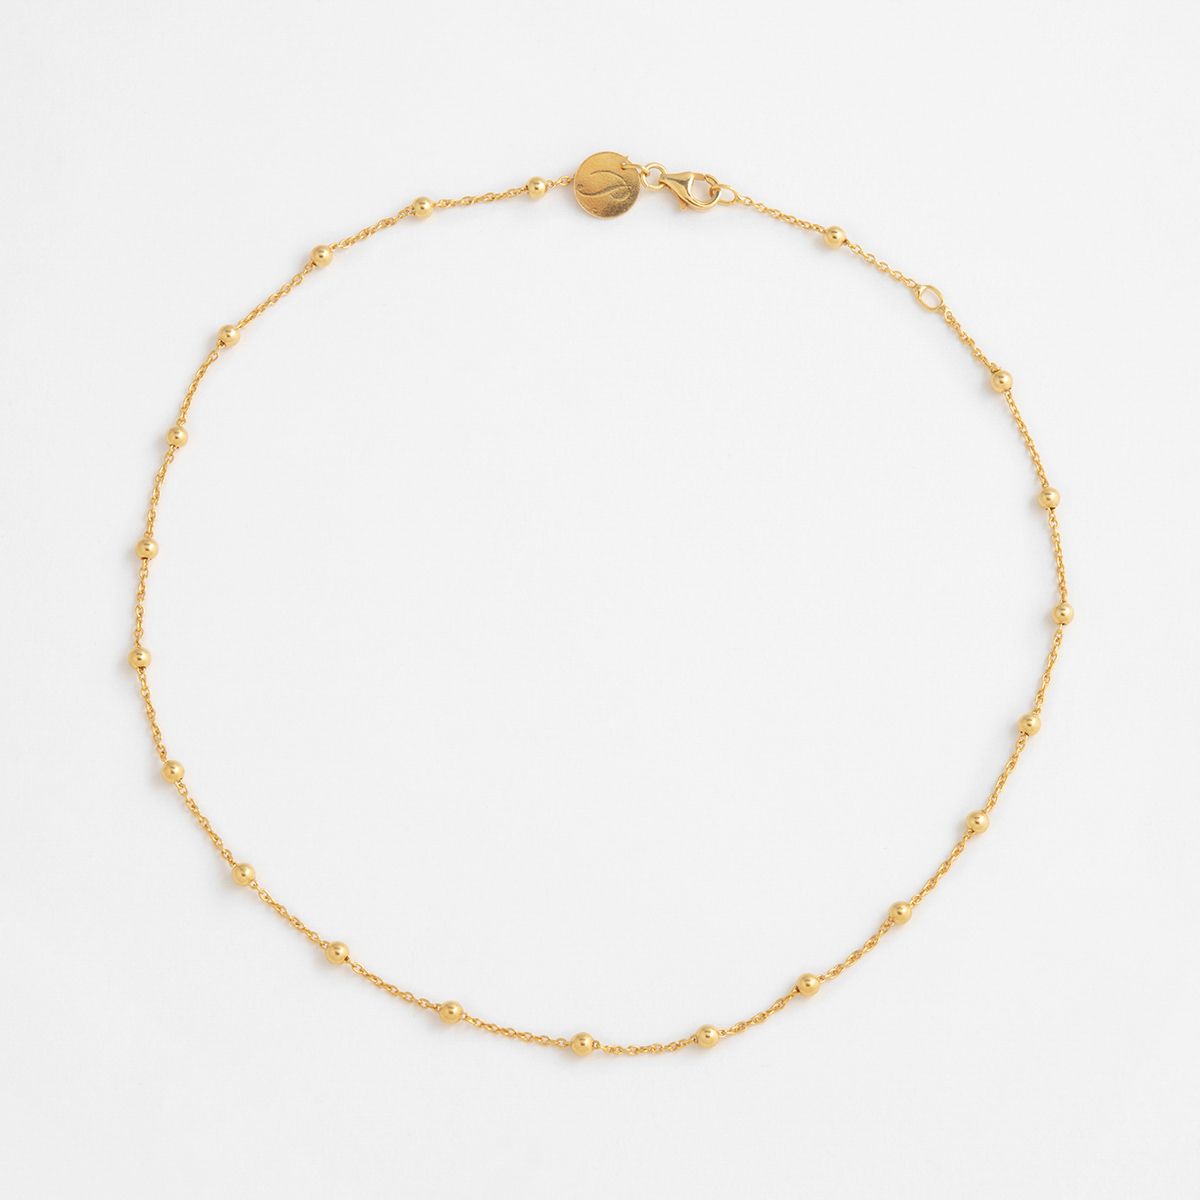 Anchor ball chain - Halsketten - 18k vergoldet